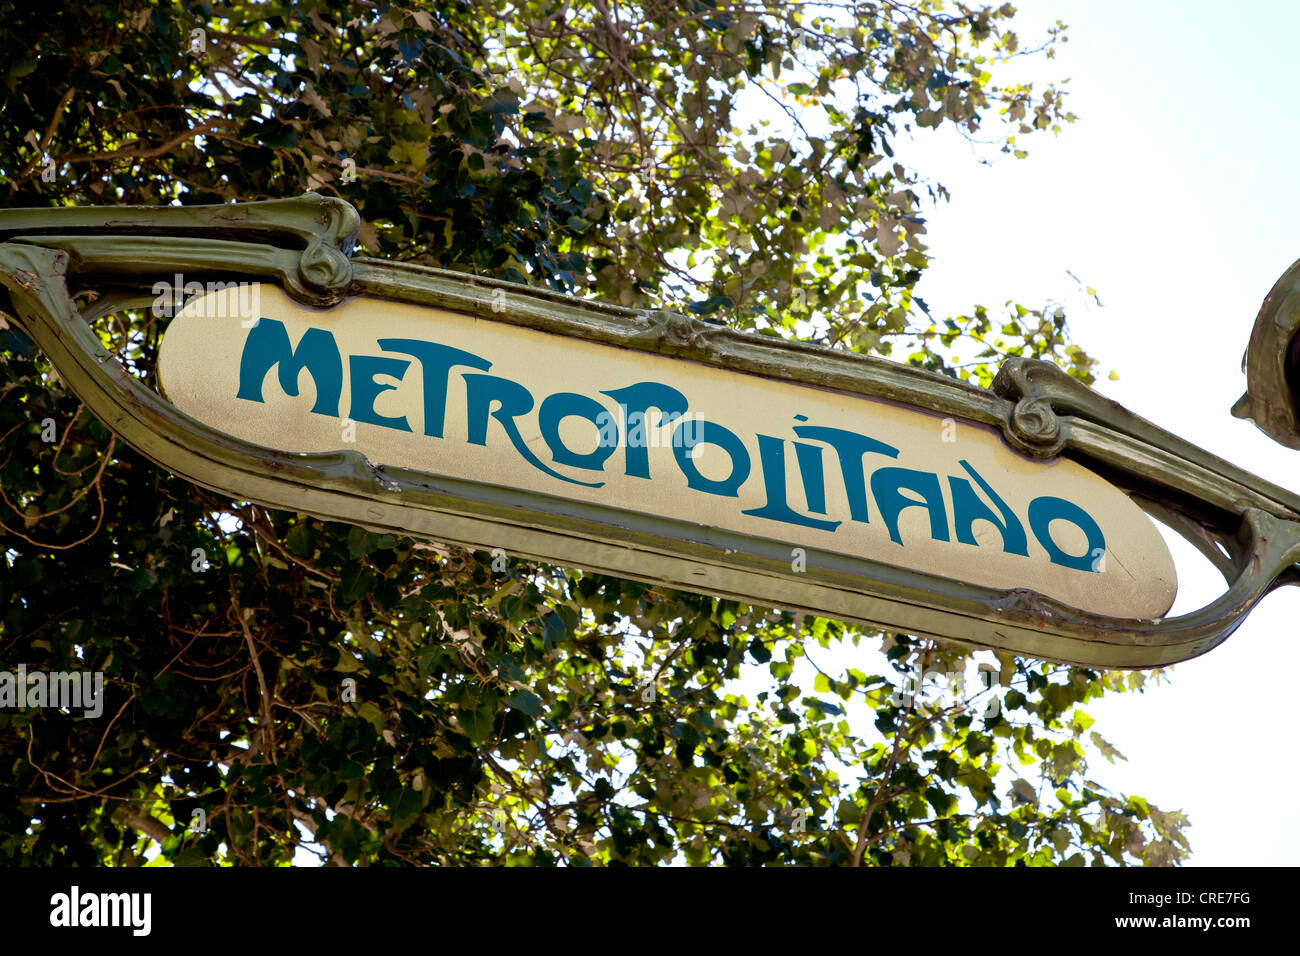 Old Art Nouveau subway sign, Metropolitano, at the metro station of Picoas in Lisbon, Portugal, Europe Stock Photo